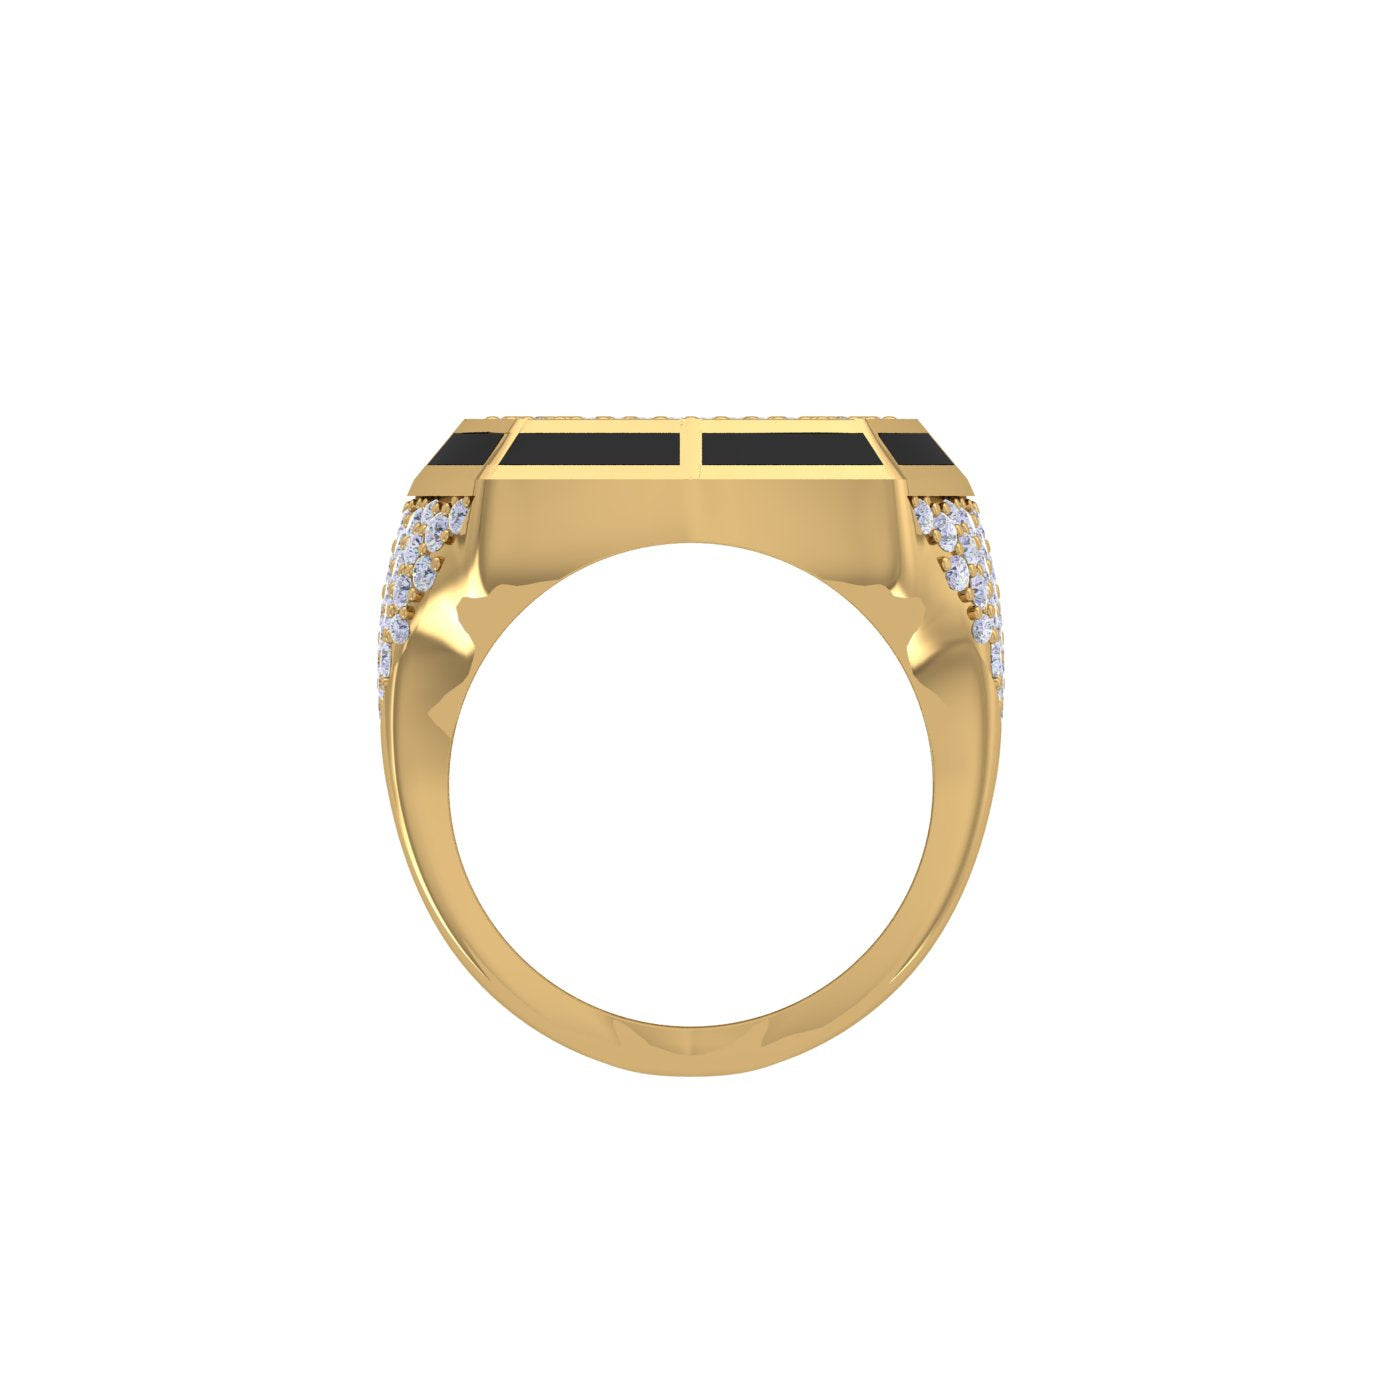 The Ikaika Men's Ring